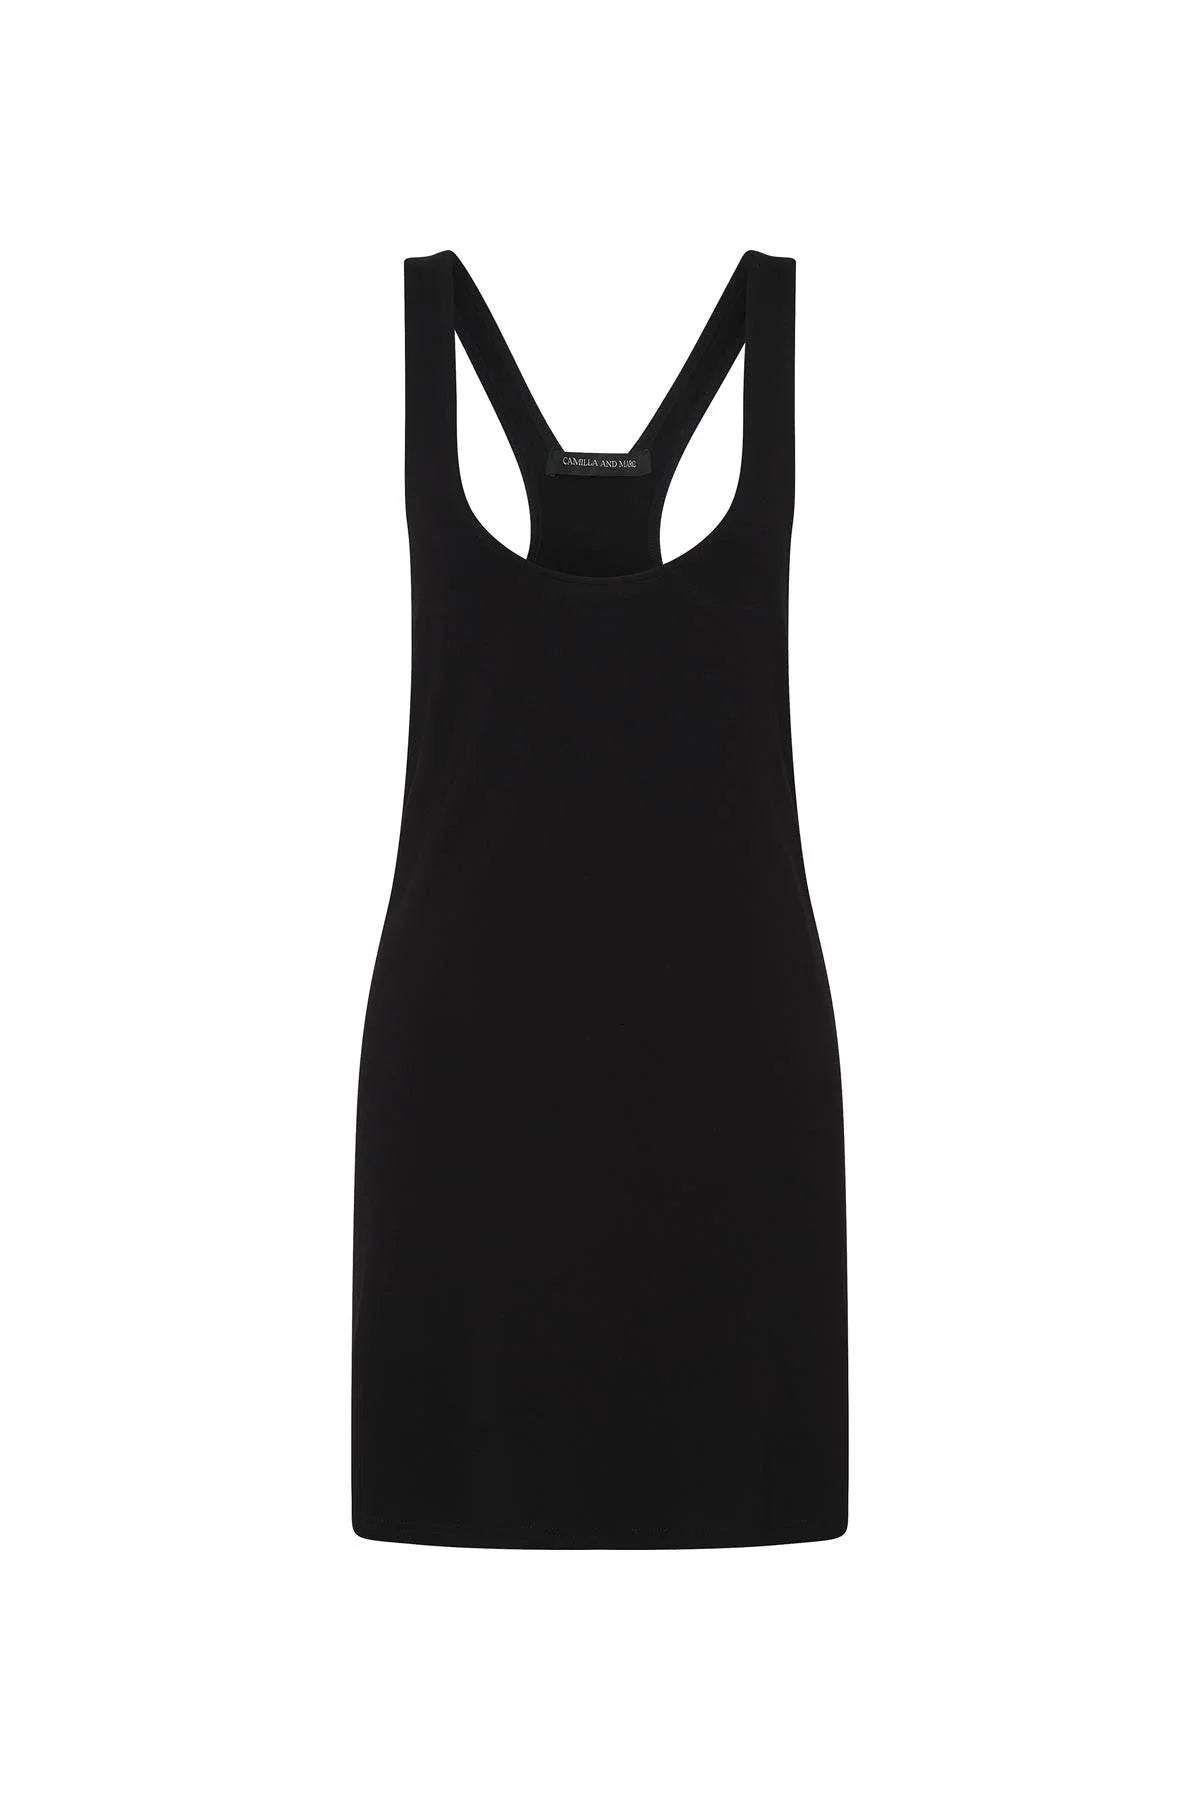 C&M Luciano Mini Dress Black